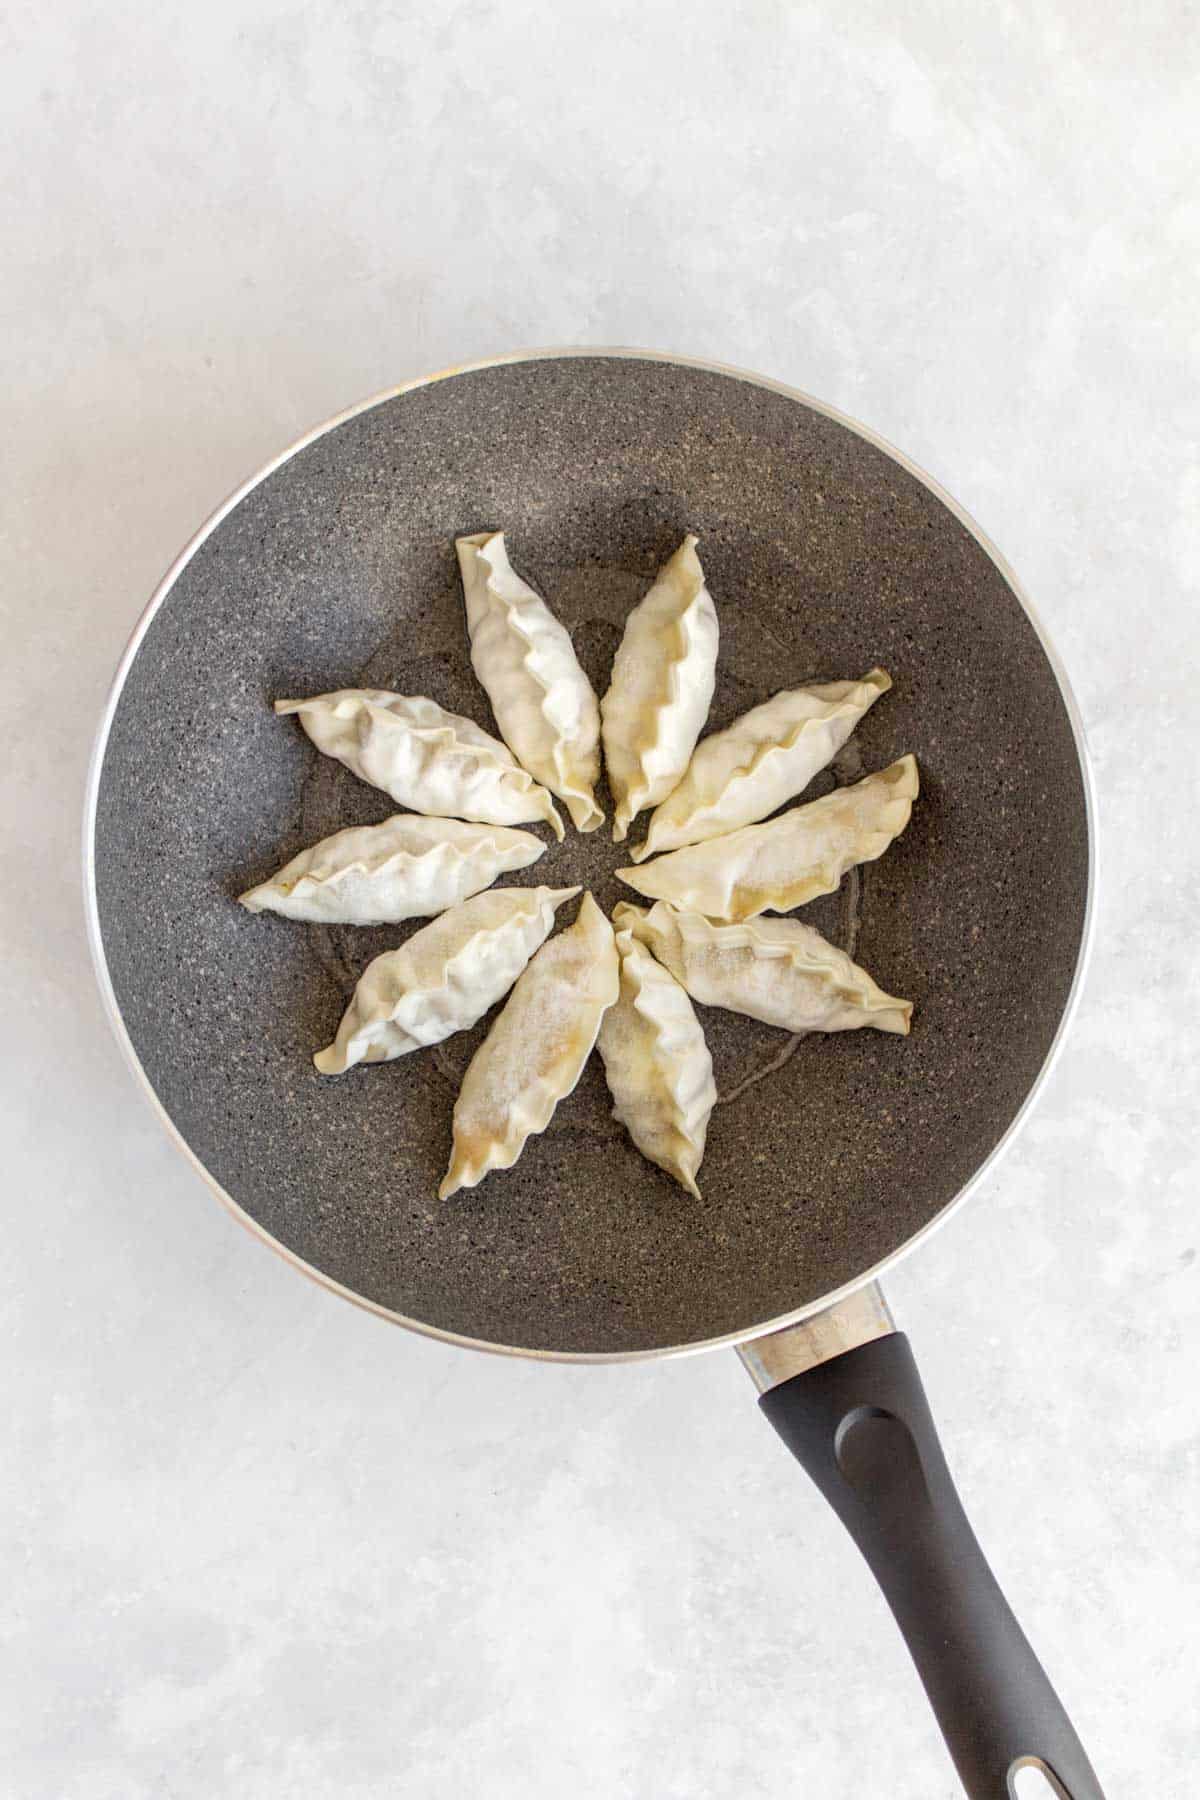 Dumplings in a non-stick pan.